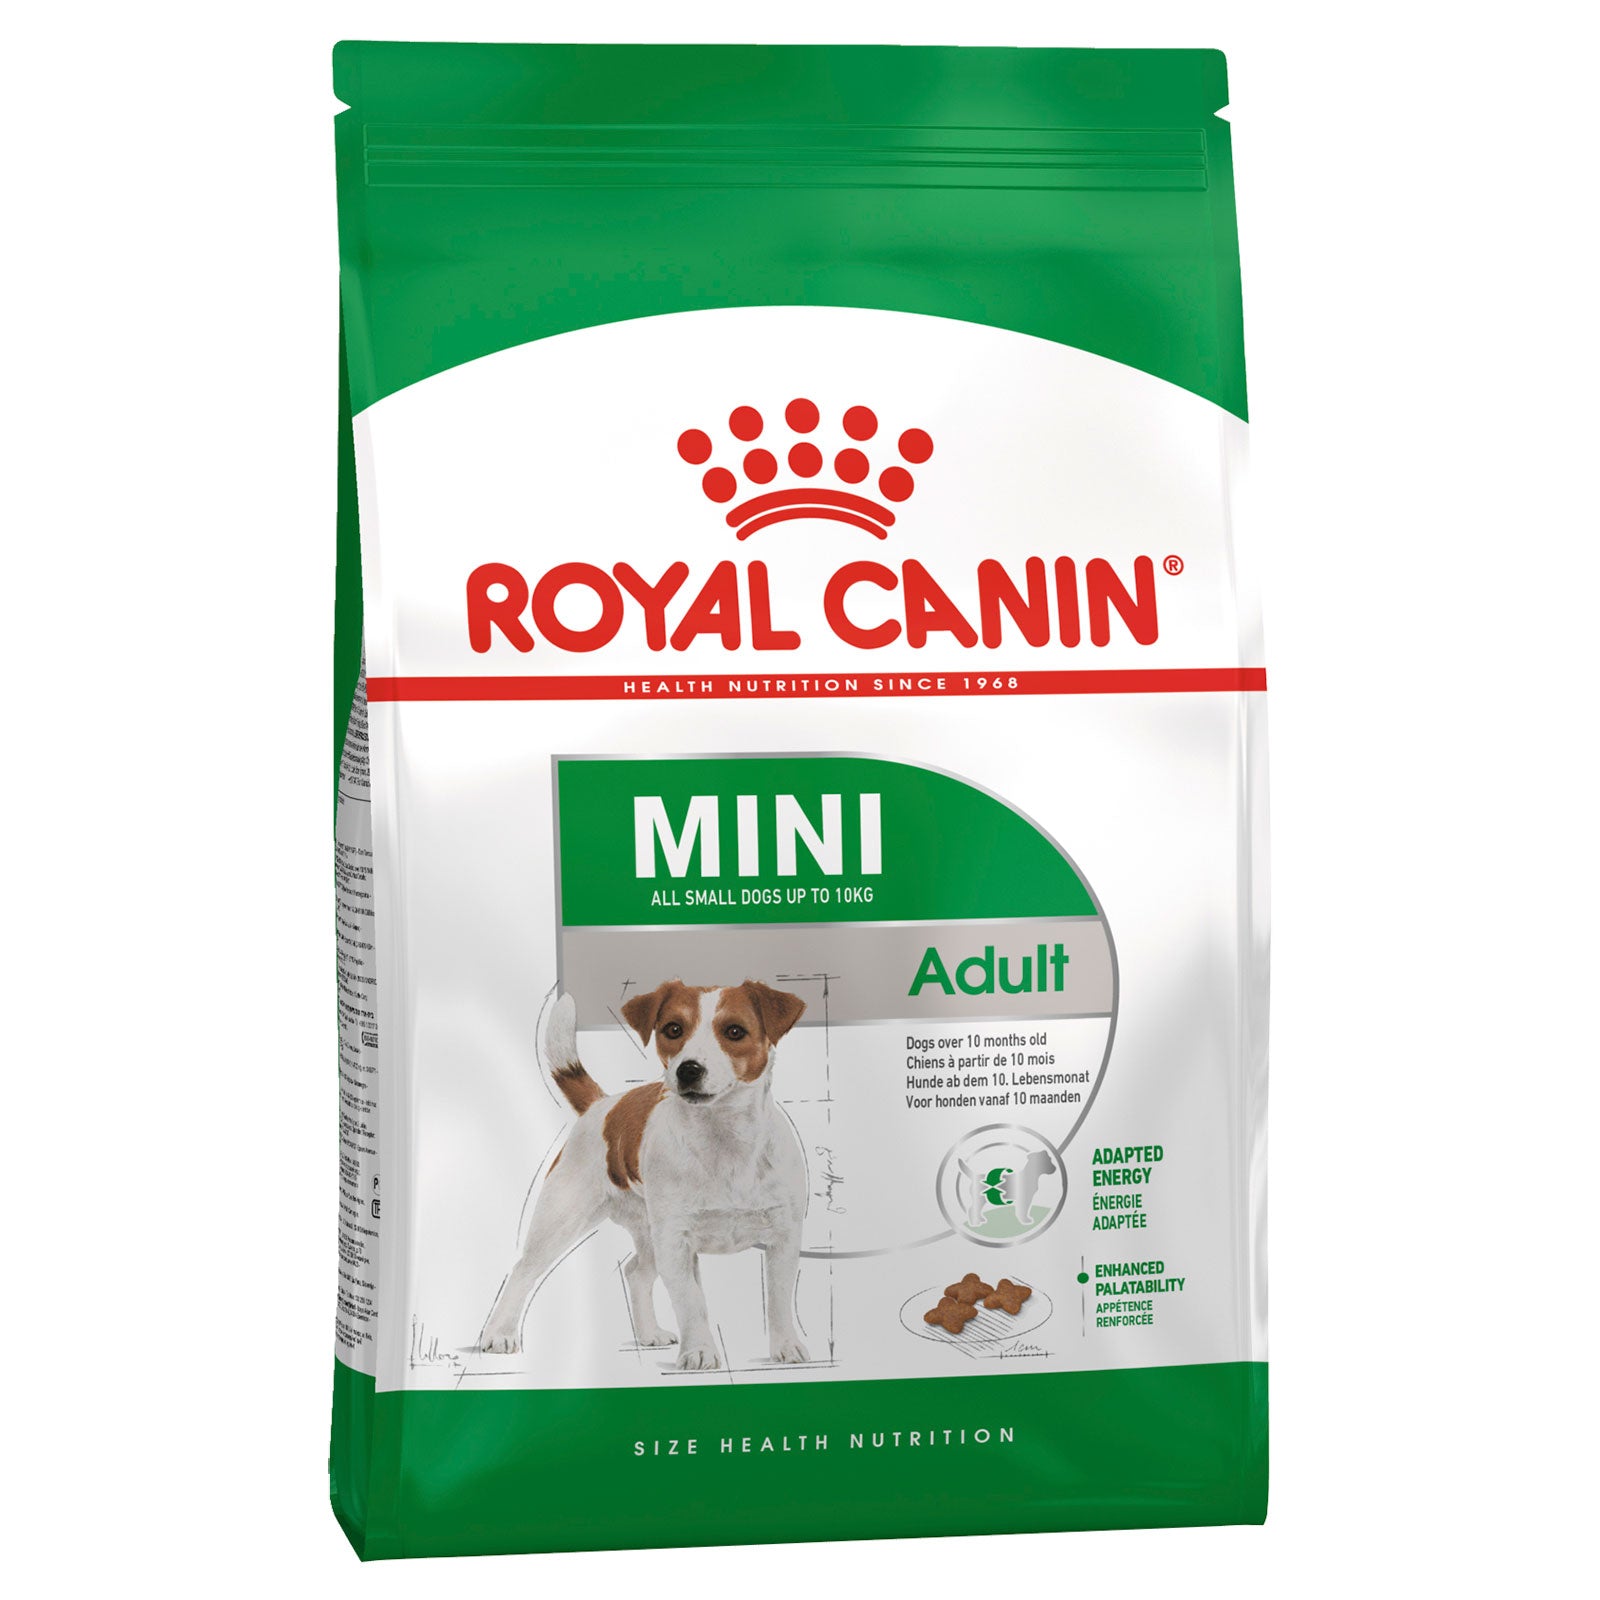 Royal Canin Dog Food Adult Mini